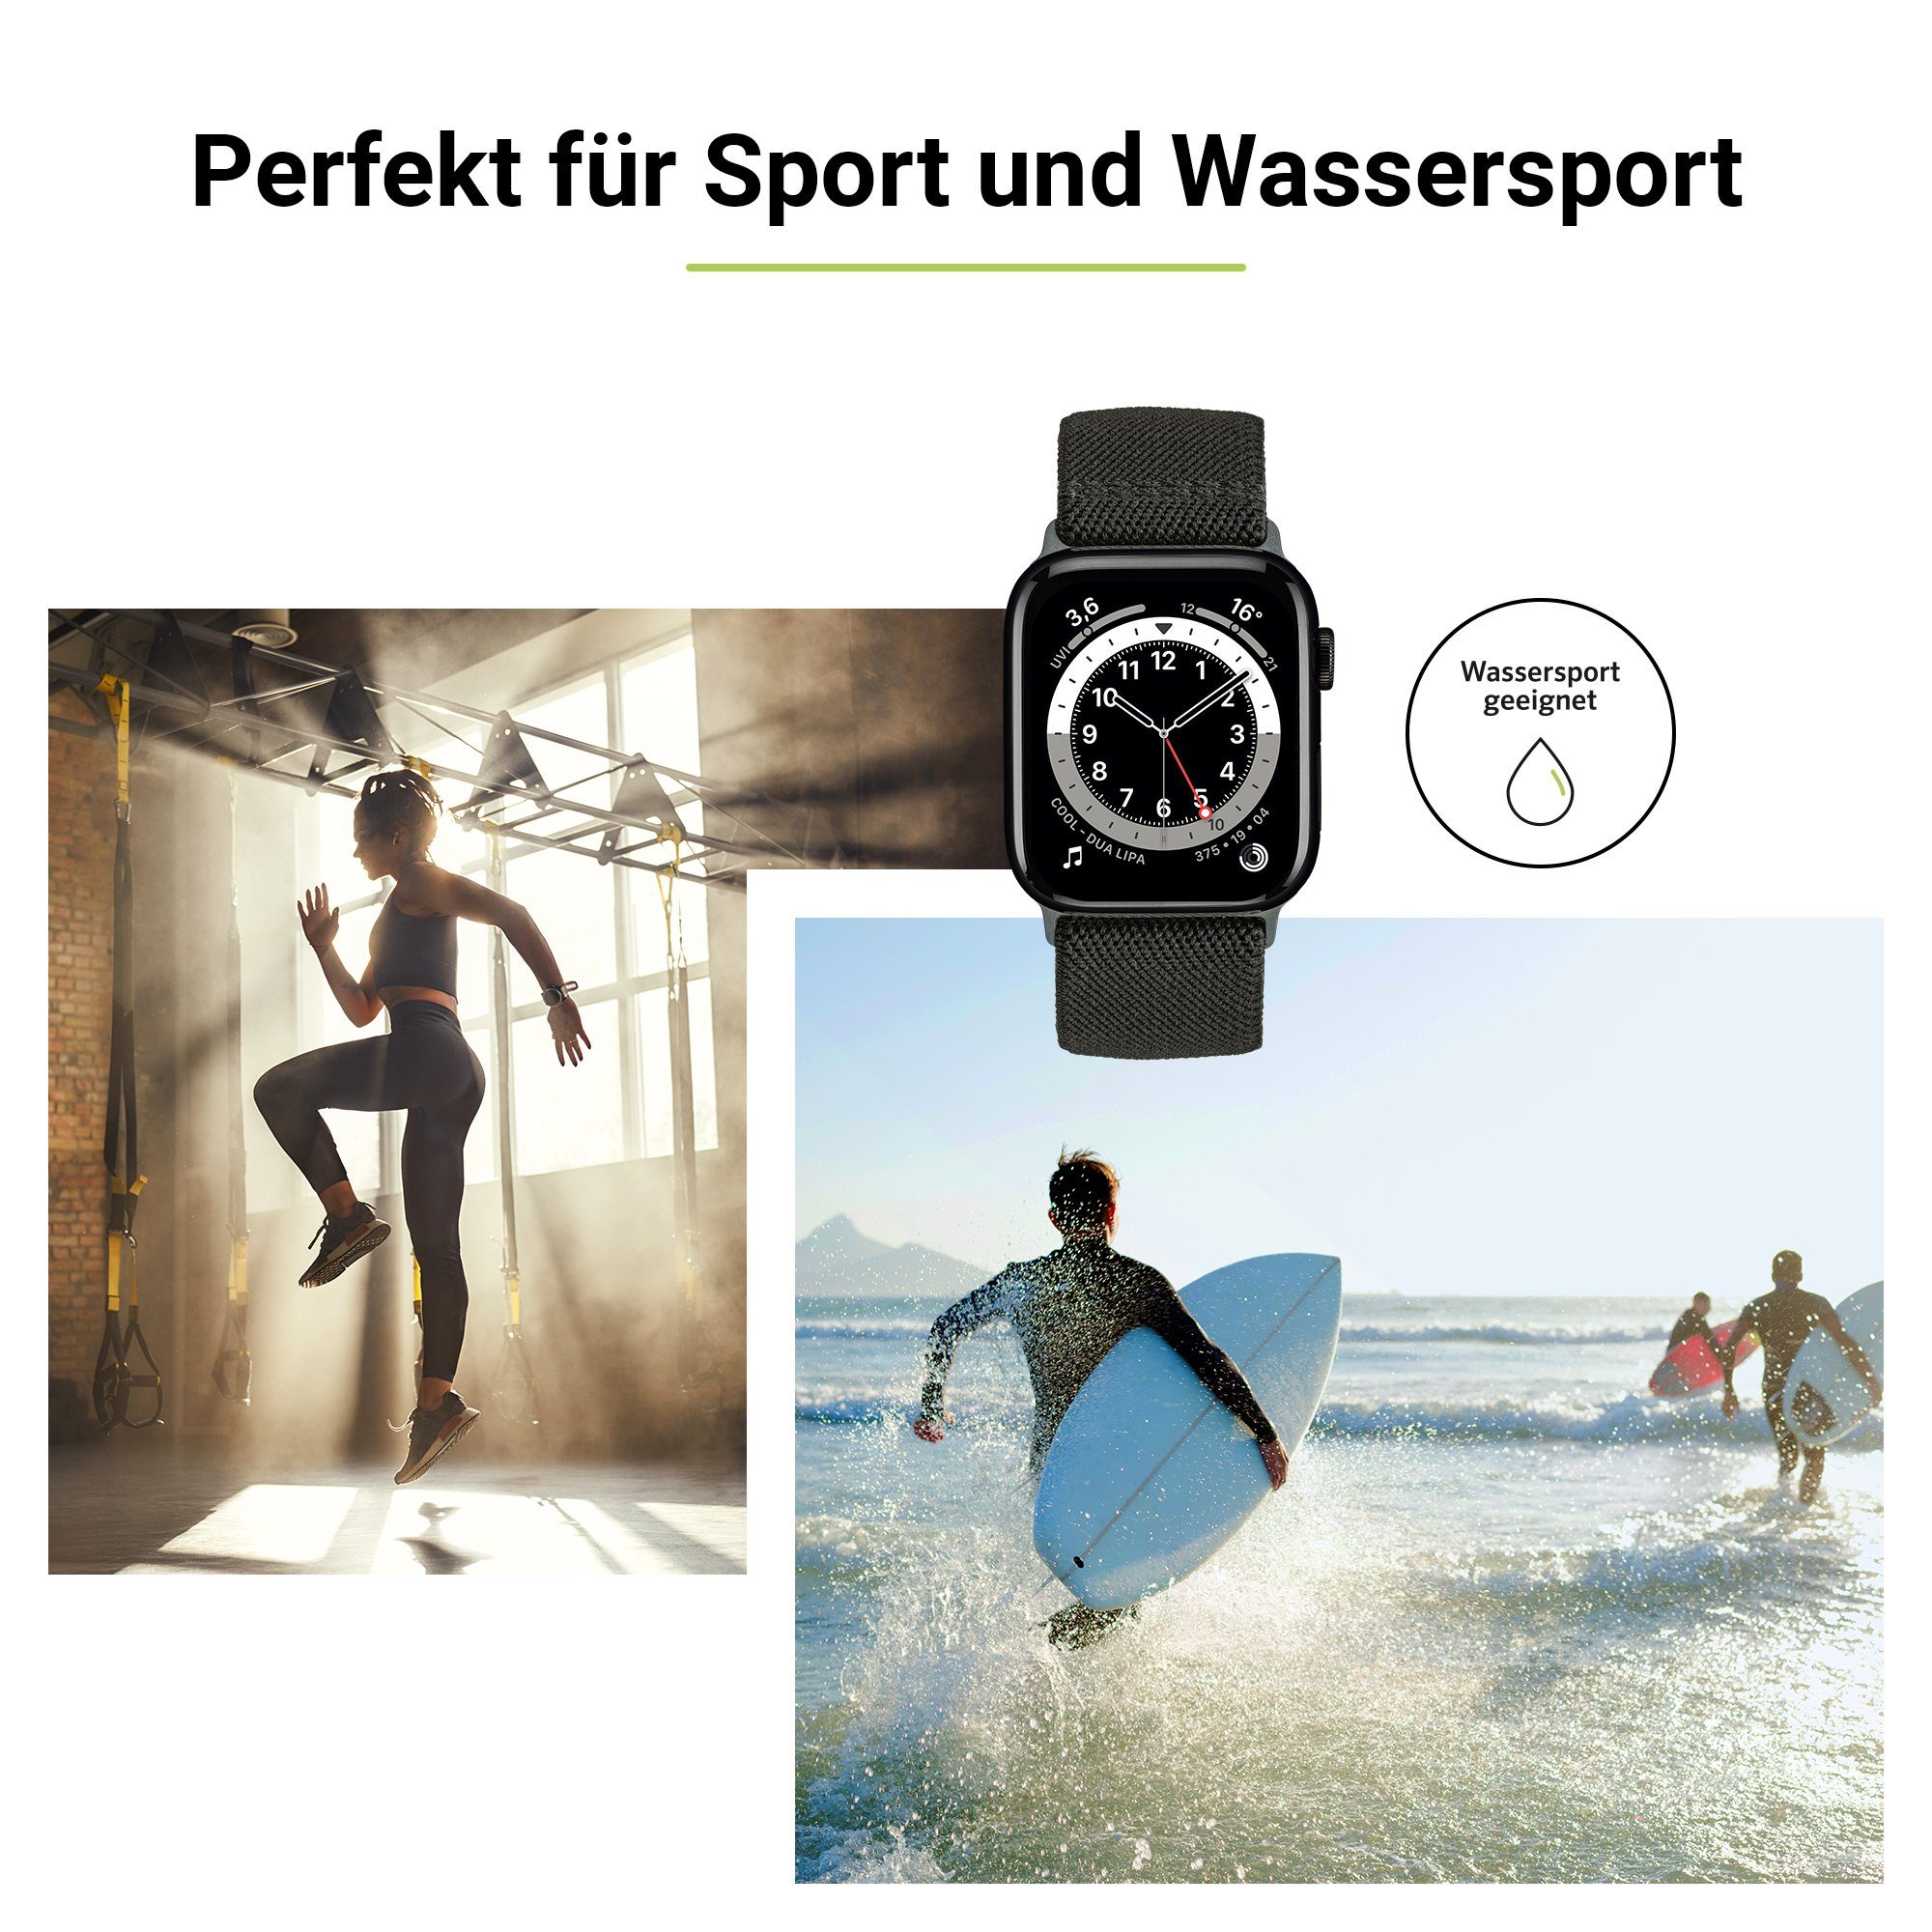 Artwizz Smartwatch-Armband WatchBand & Apple (44mm), (42mm) 6-4 2 (49mm), Ultra mit 3-1 / Textil Adapter, SE (45mm), Watch Flex, Uhrenarmband Space-Grau, 9-7